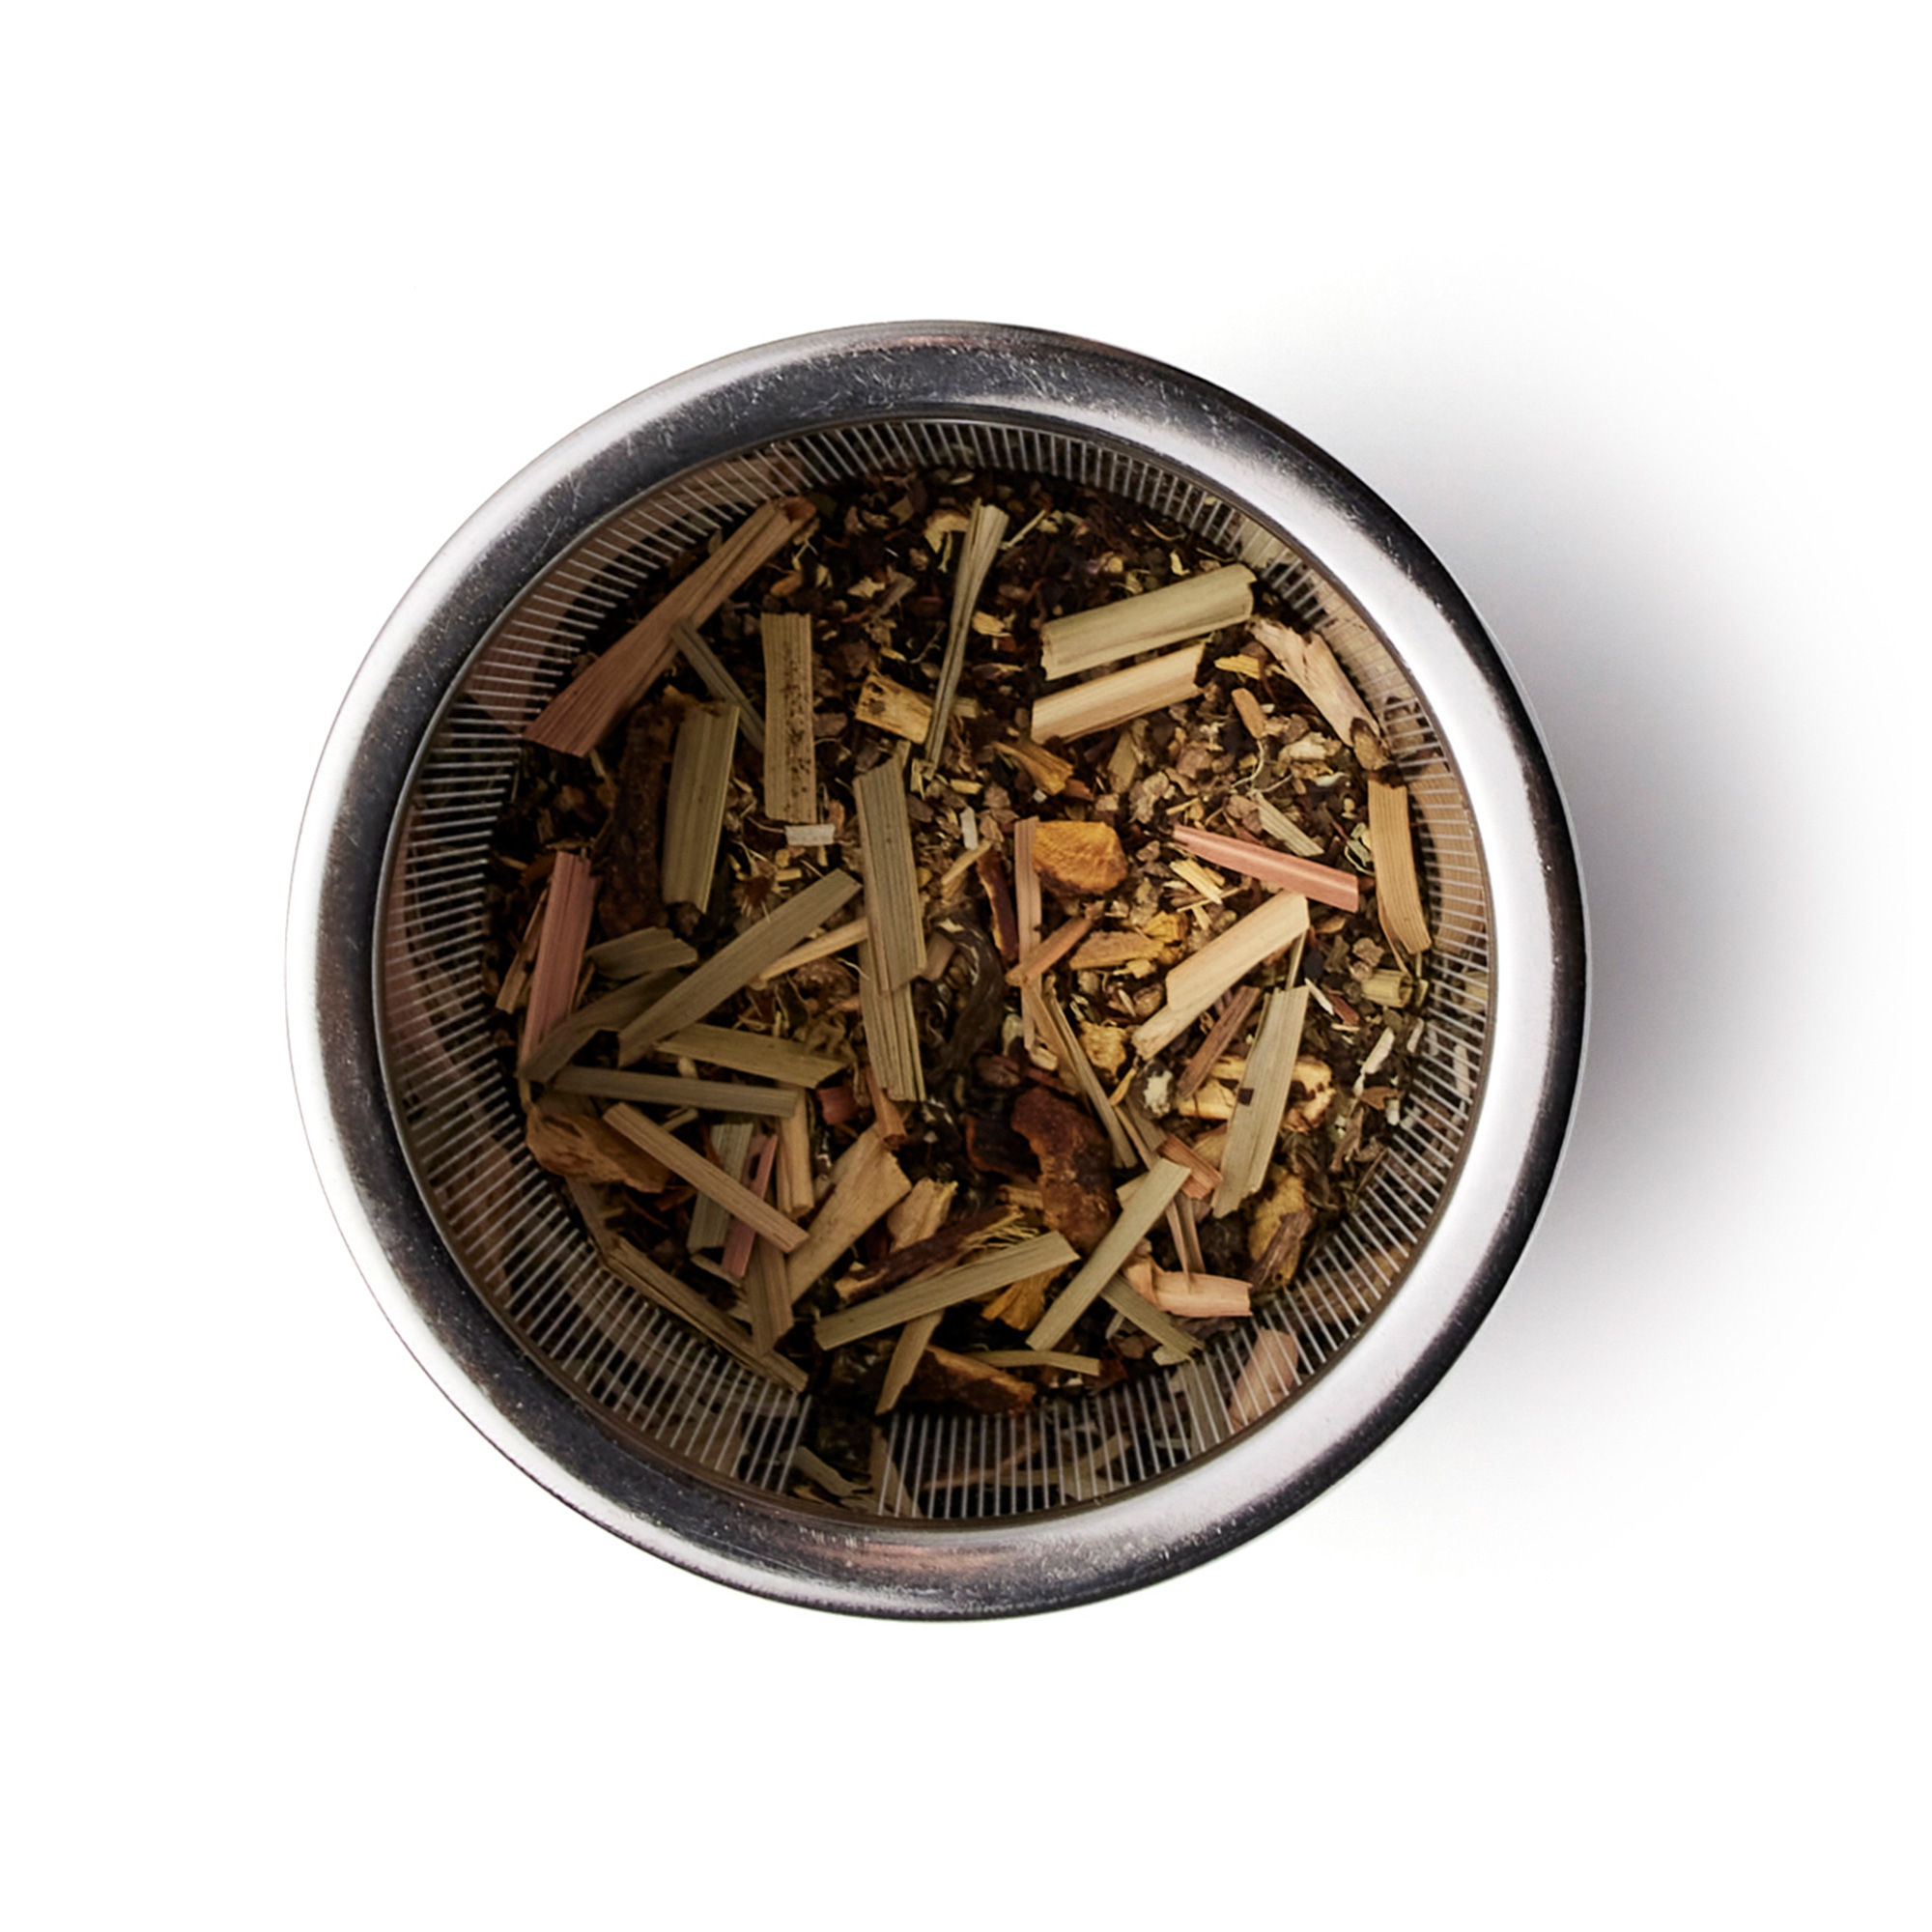 Bitz - Teapot with tea strainer - 1.2 L -  Wood